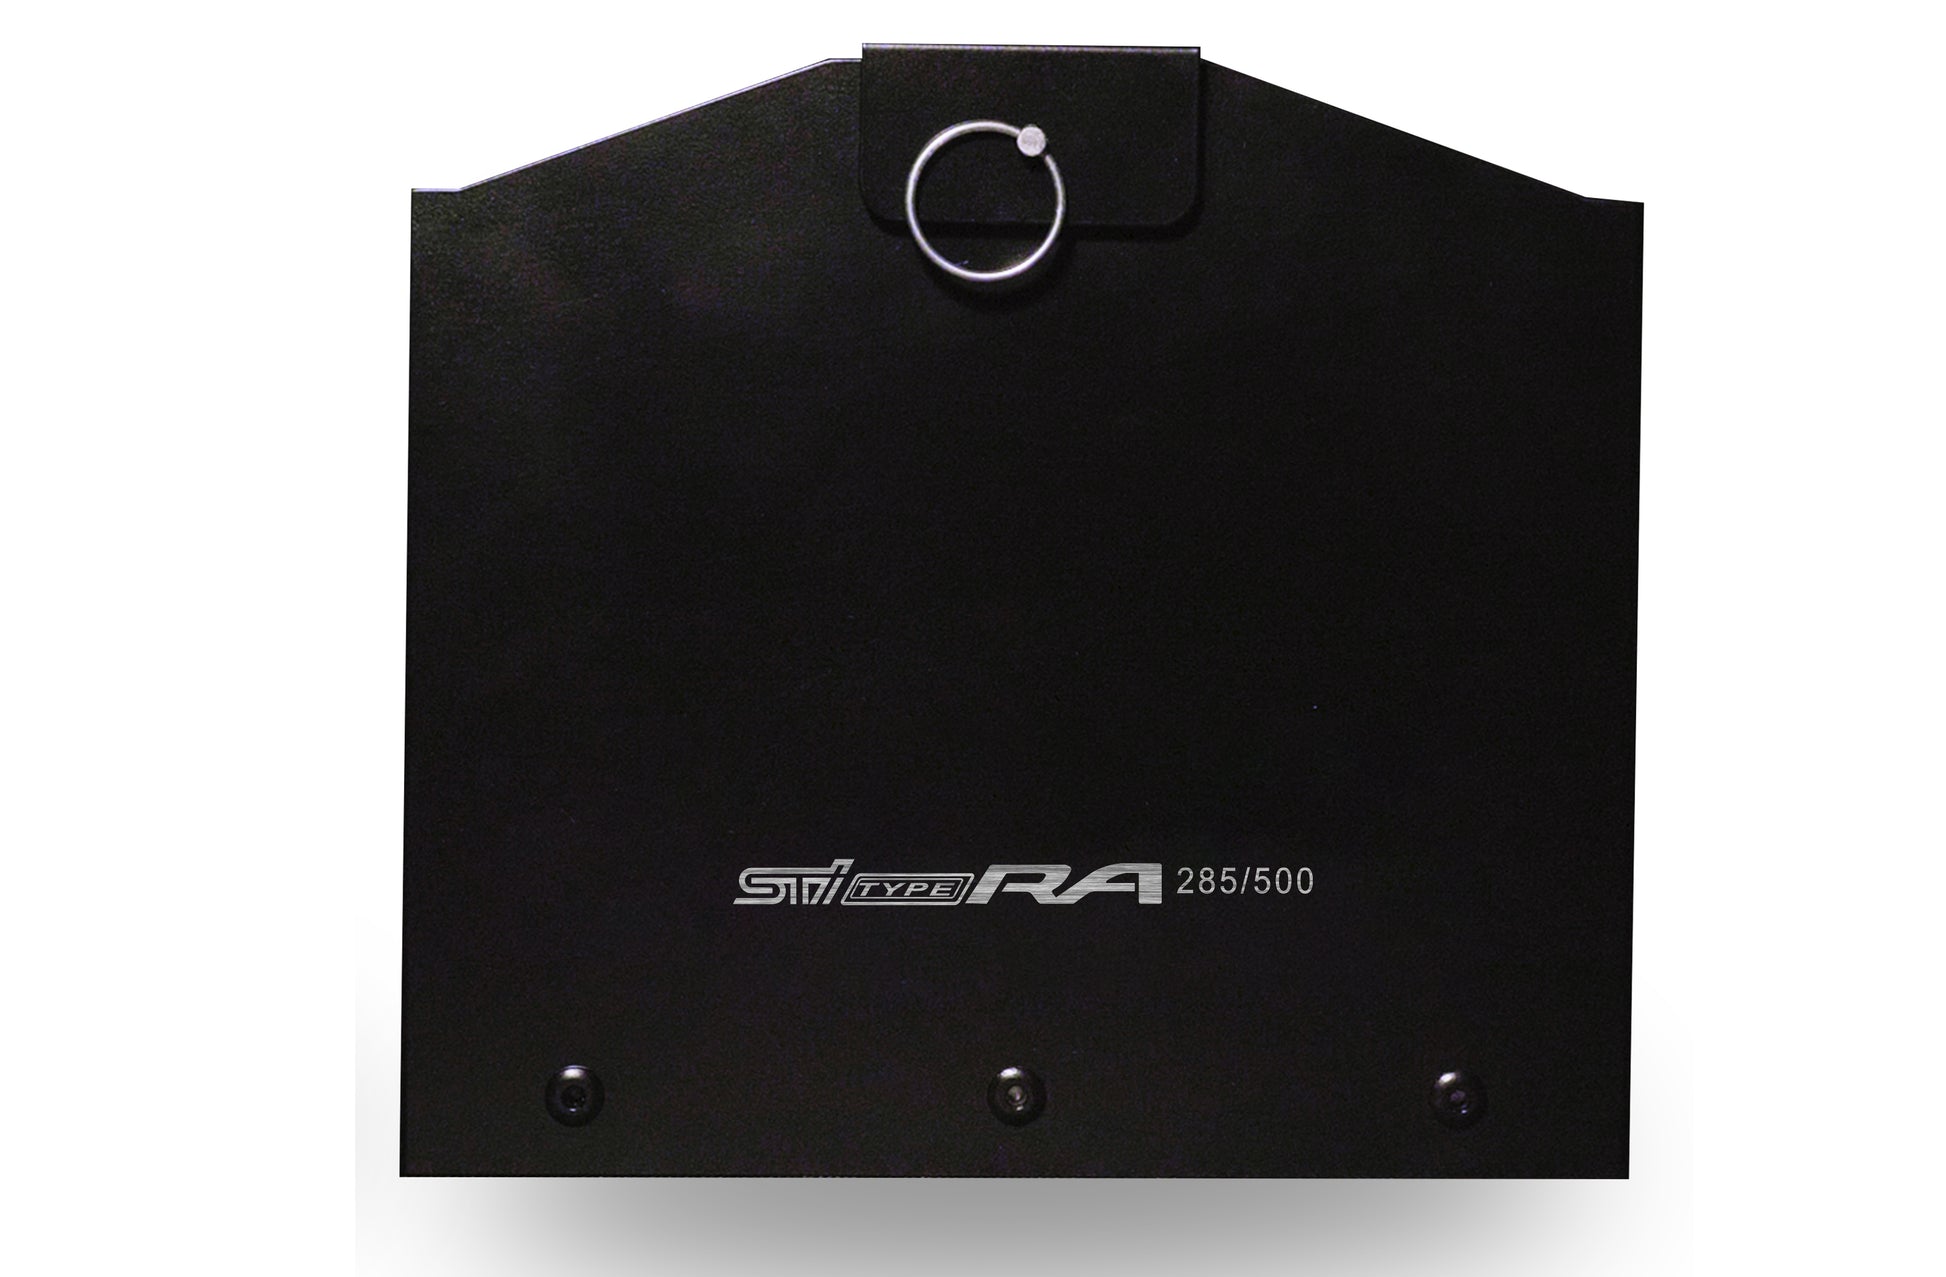 2018 Subaru Type RA Battery Mount Mele Design Firm